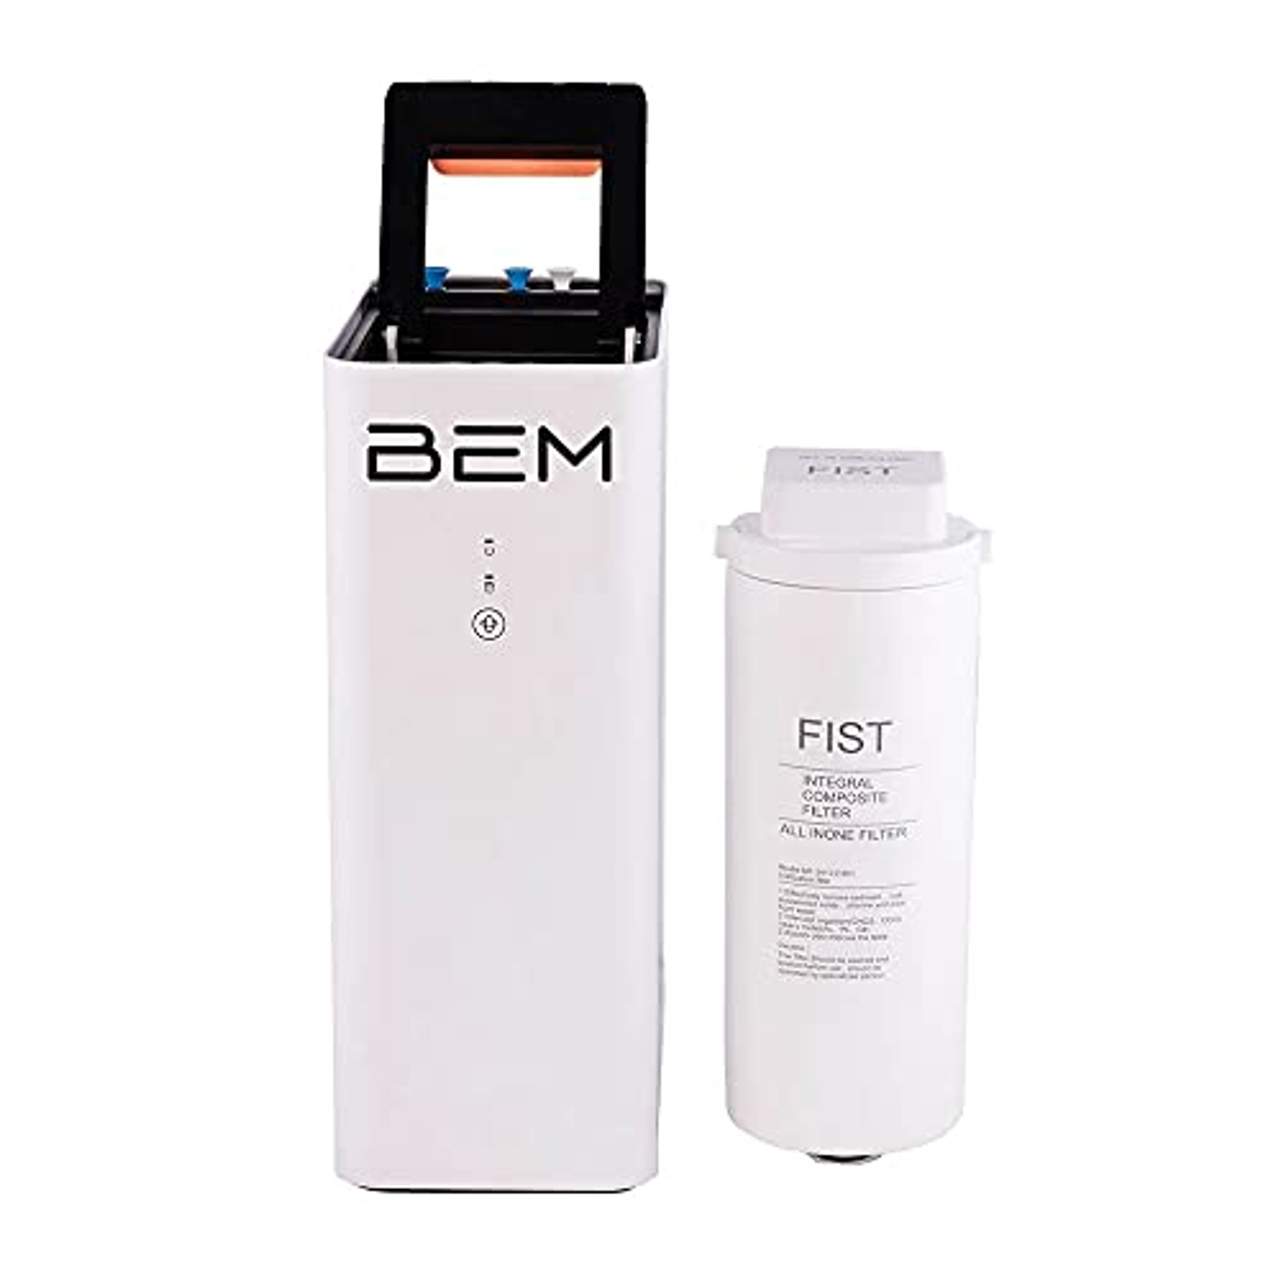 BEM Robin: Wasserfilter Filteranlage